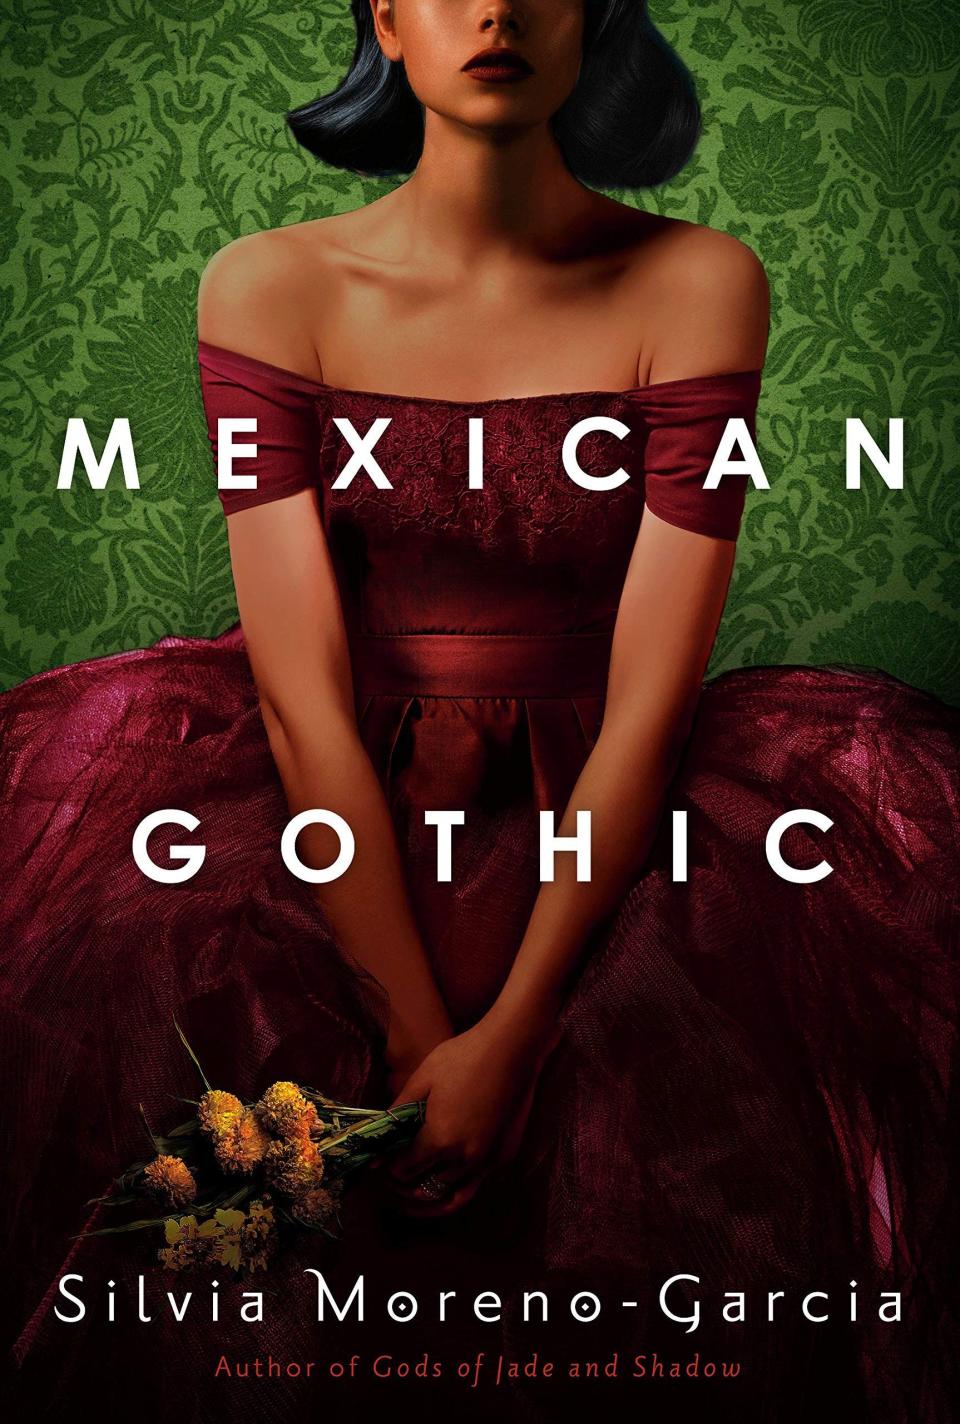 22) ‘Mexican Gothic’ by Silvia Moreno-Garcia